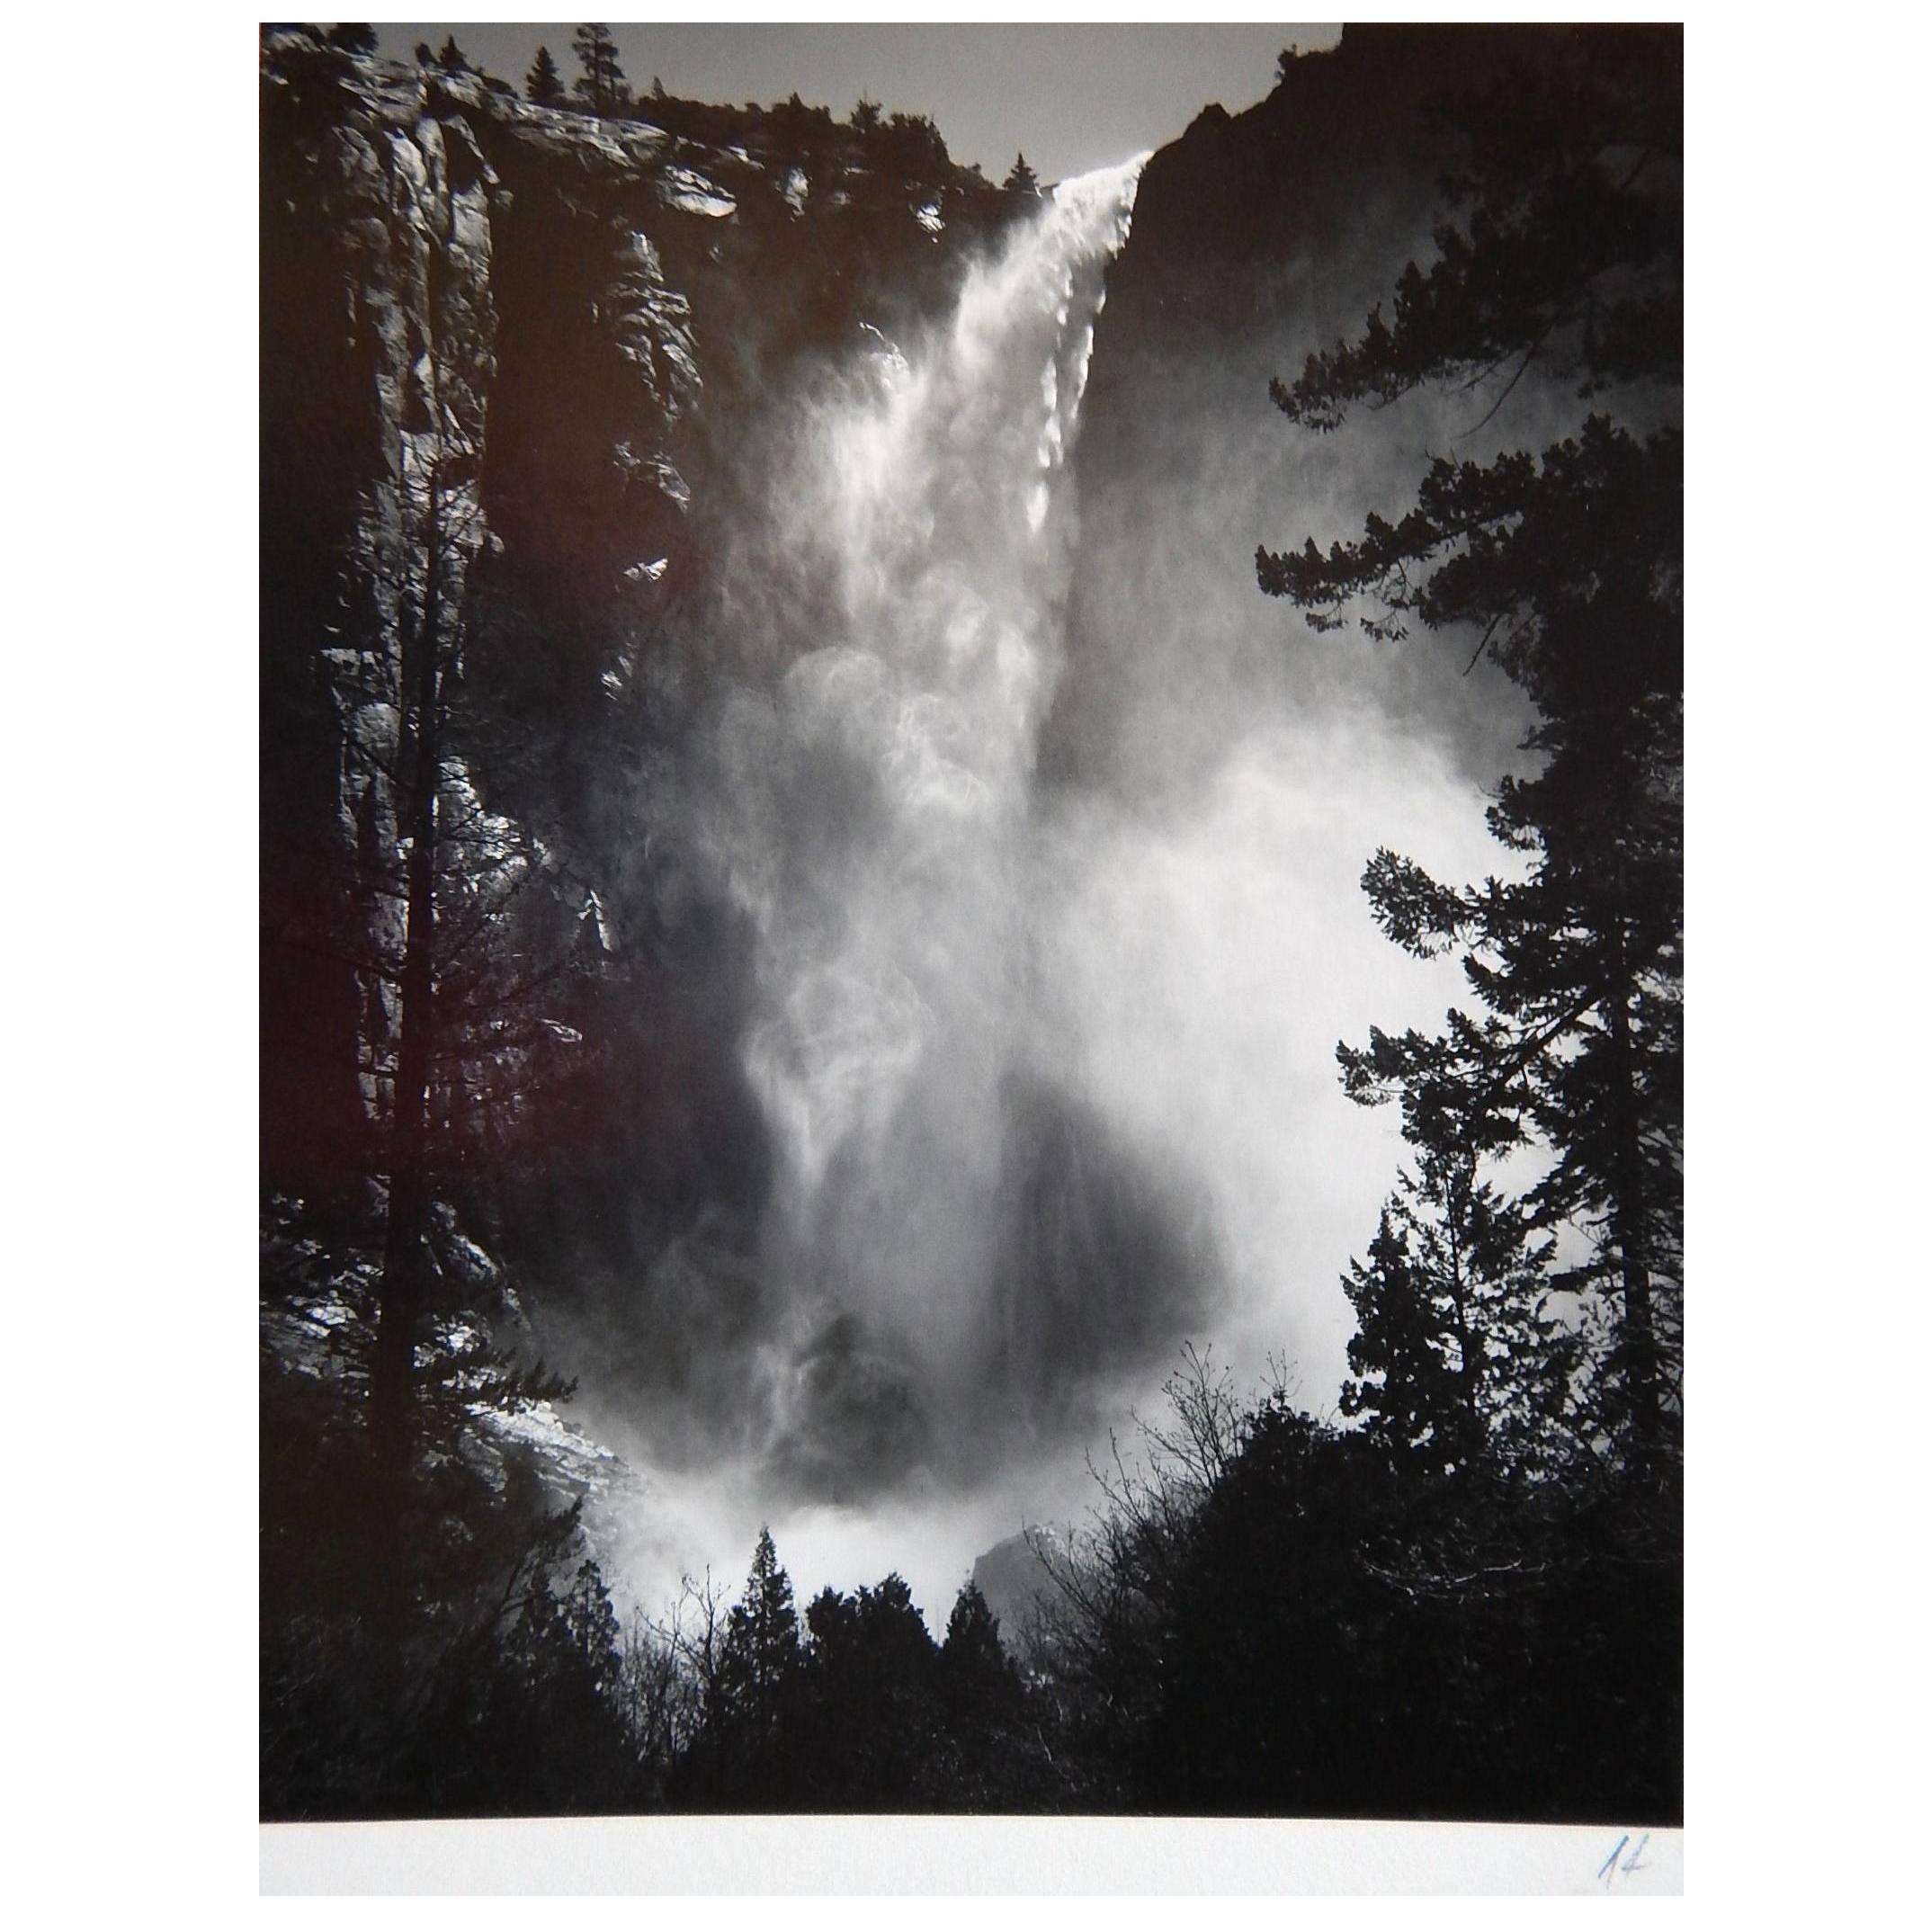 Ansel Adams Signed Original Gelatin Silver Print, "Bridalveil Fall, Yosemite"